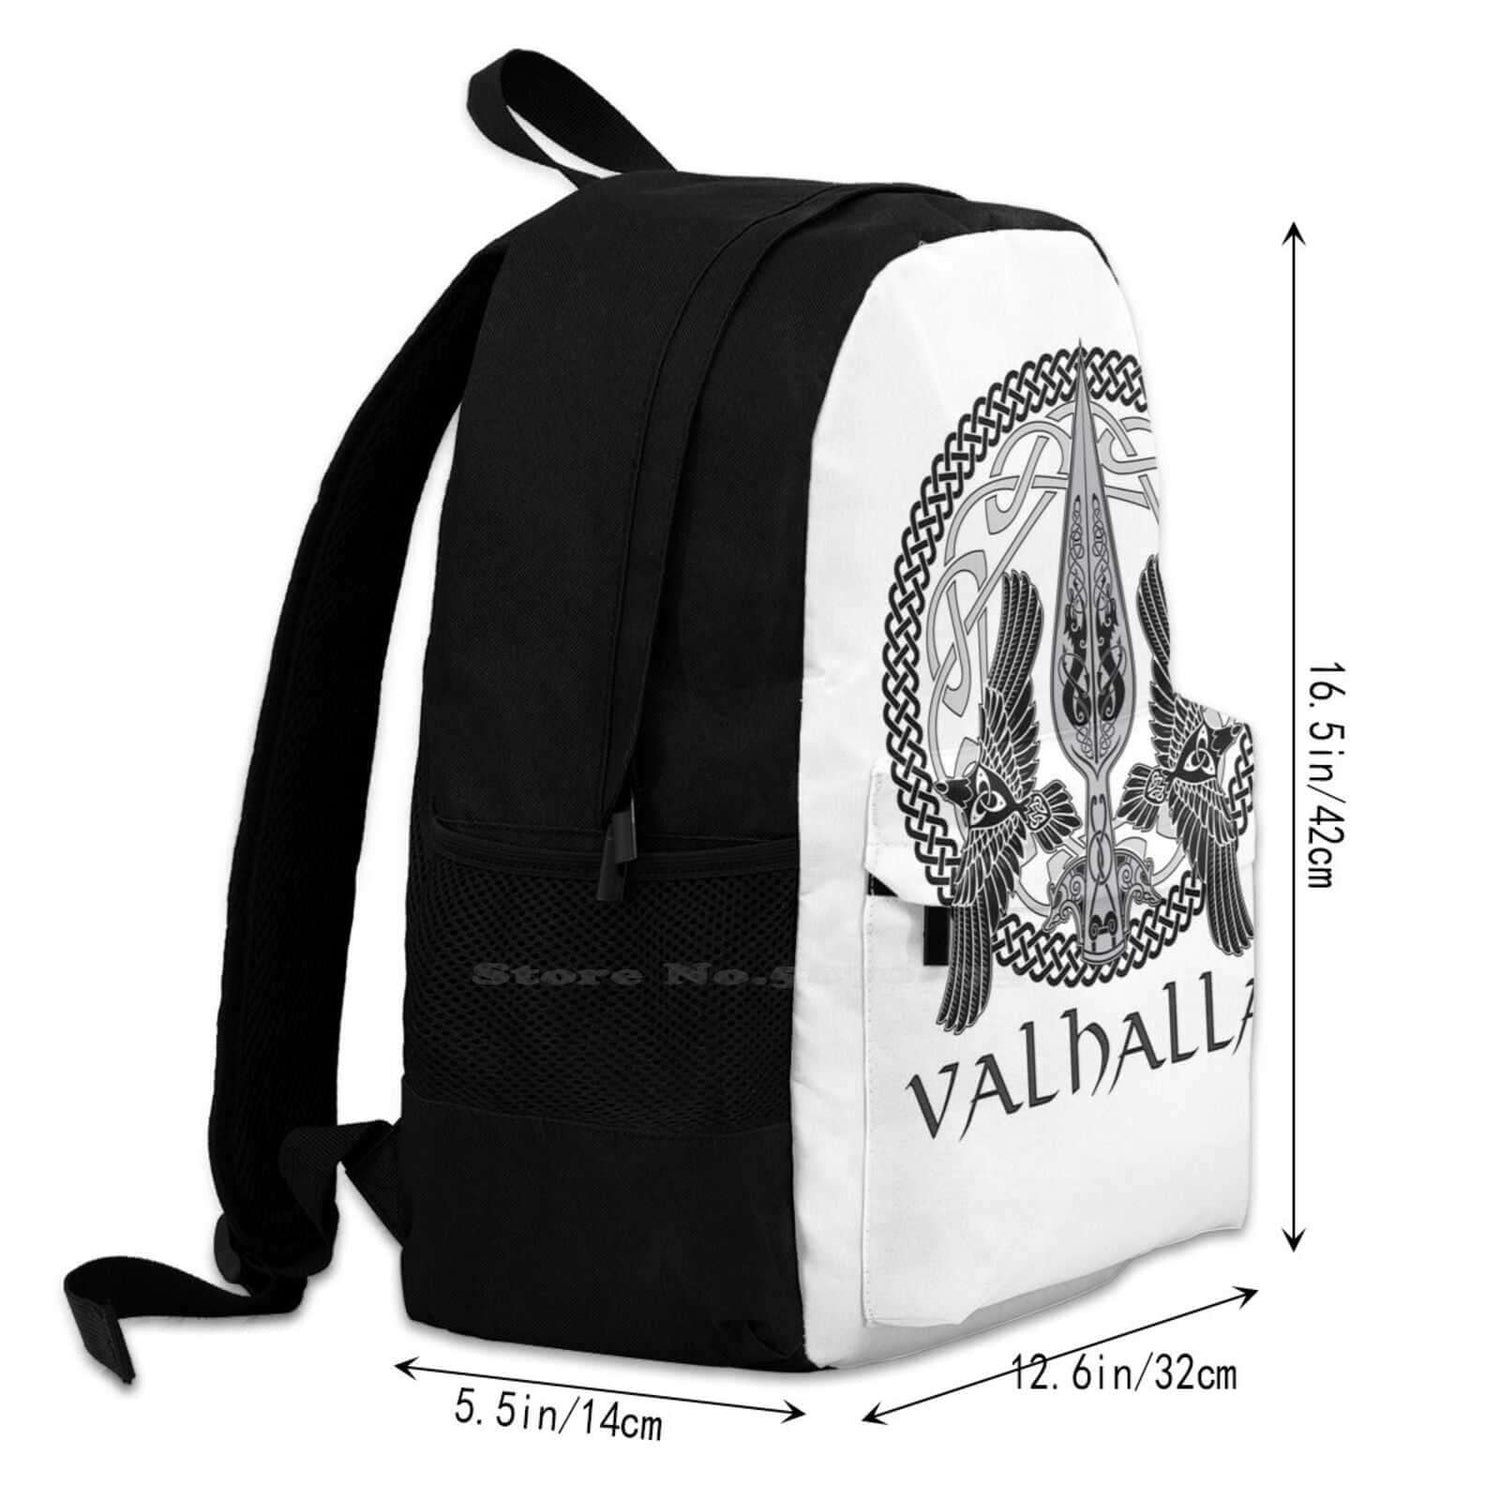 Gungnir Odin's Spear VALHALLA Large Capacity Backpack